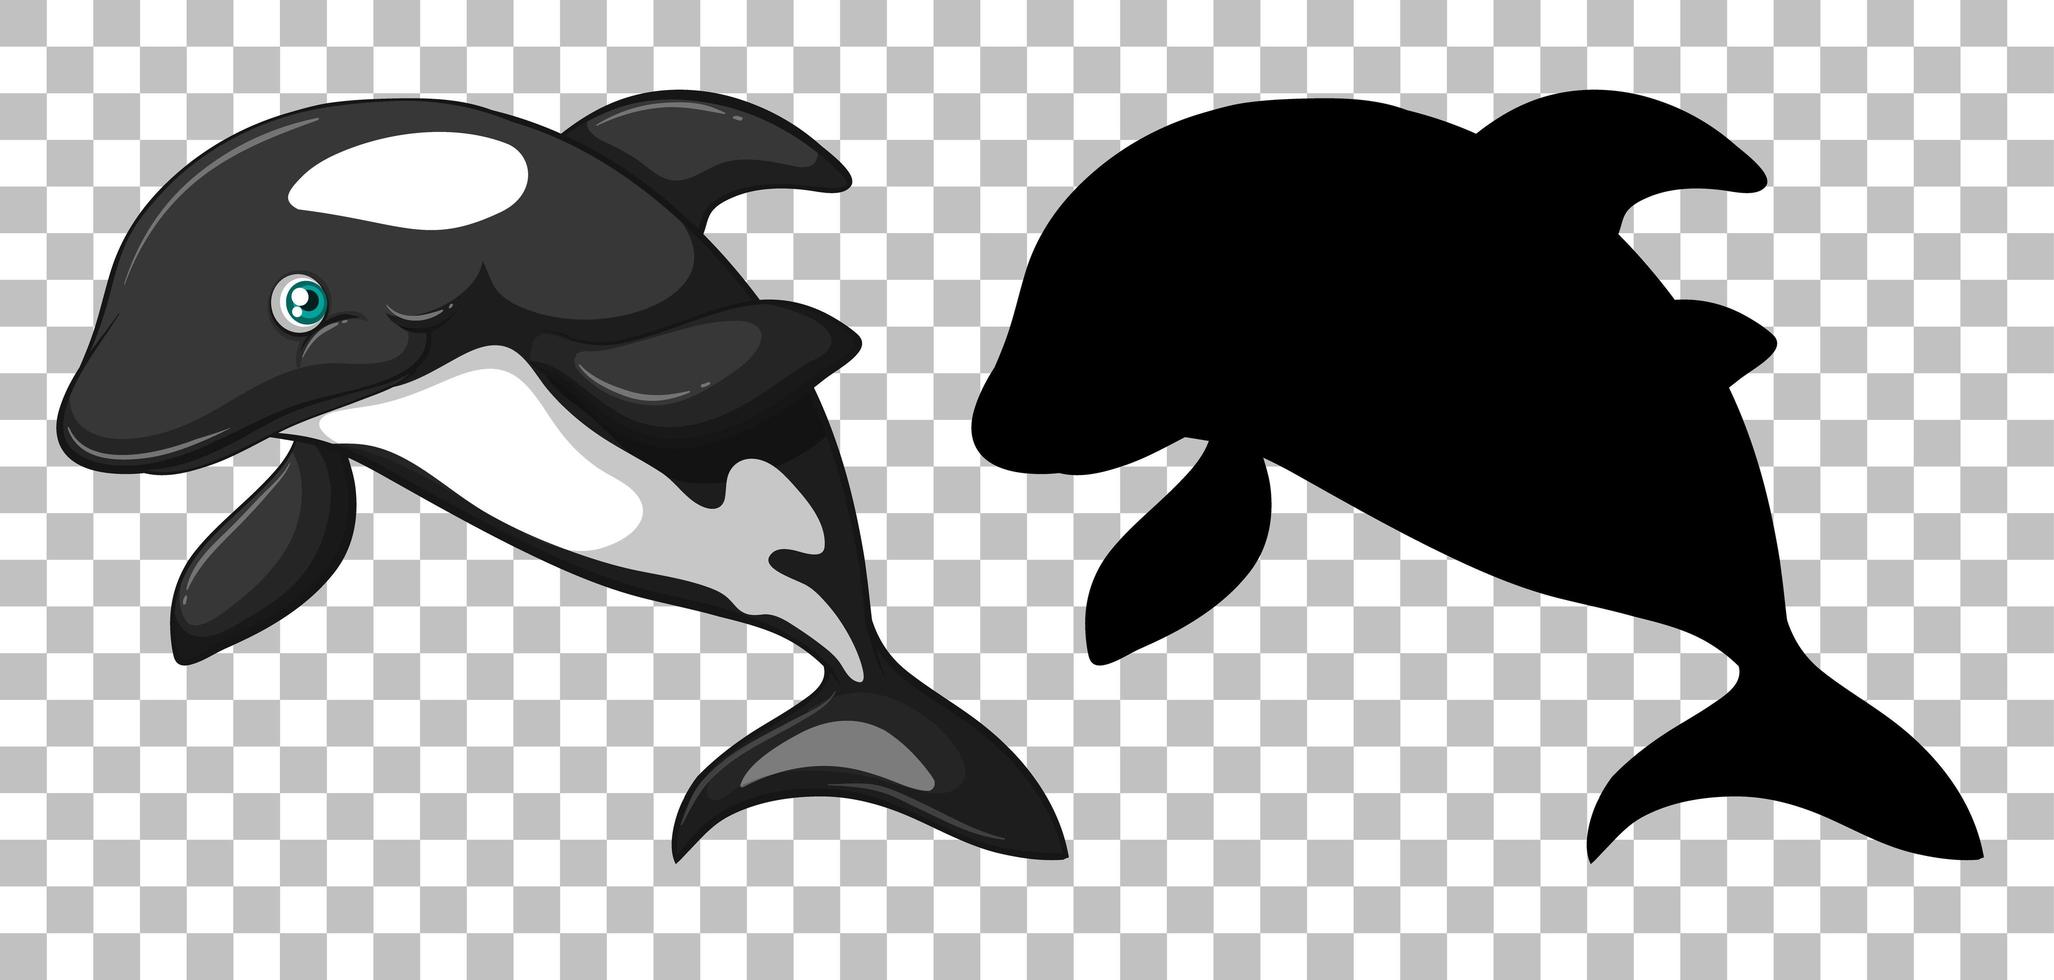 baleia orca fofa e sua silhueta vetor